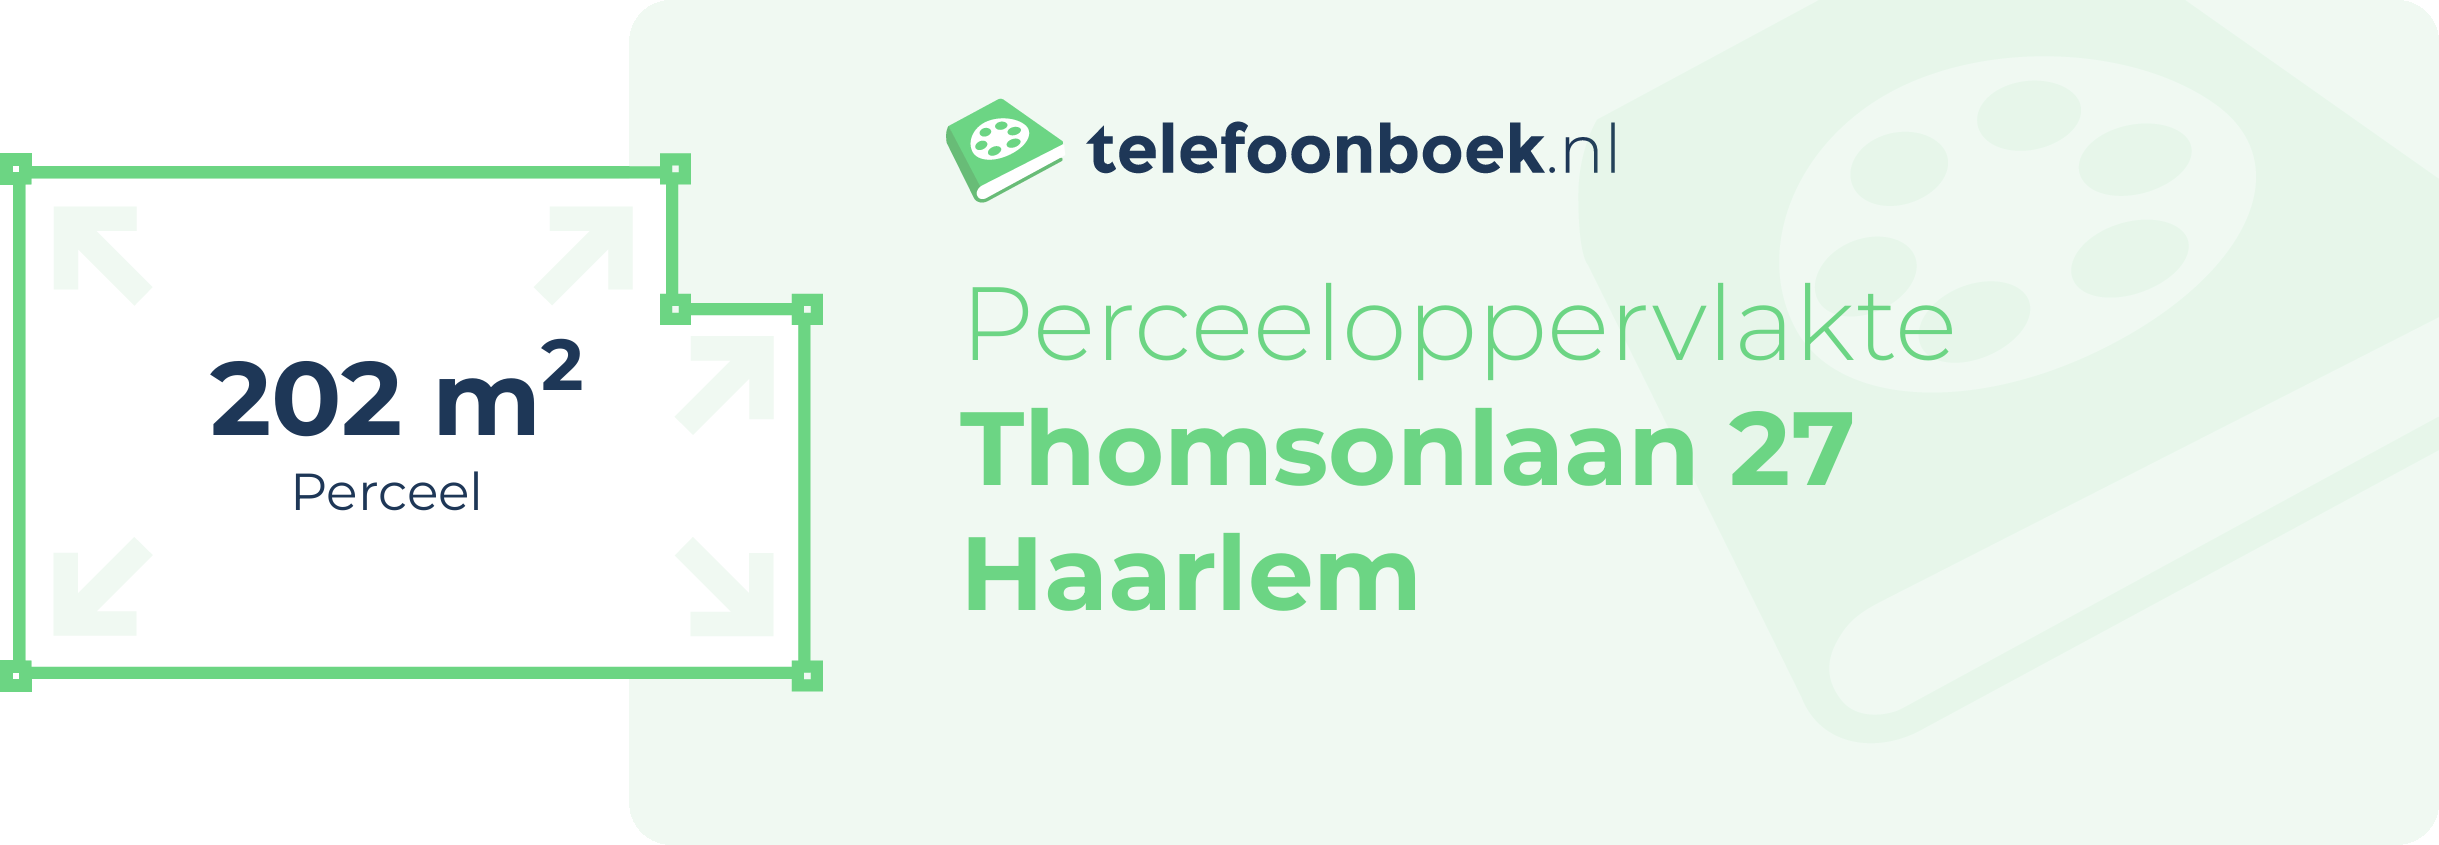 Perceeloppervlakte Thomsonlaan 27 Haarlem